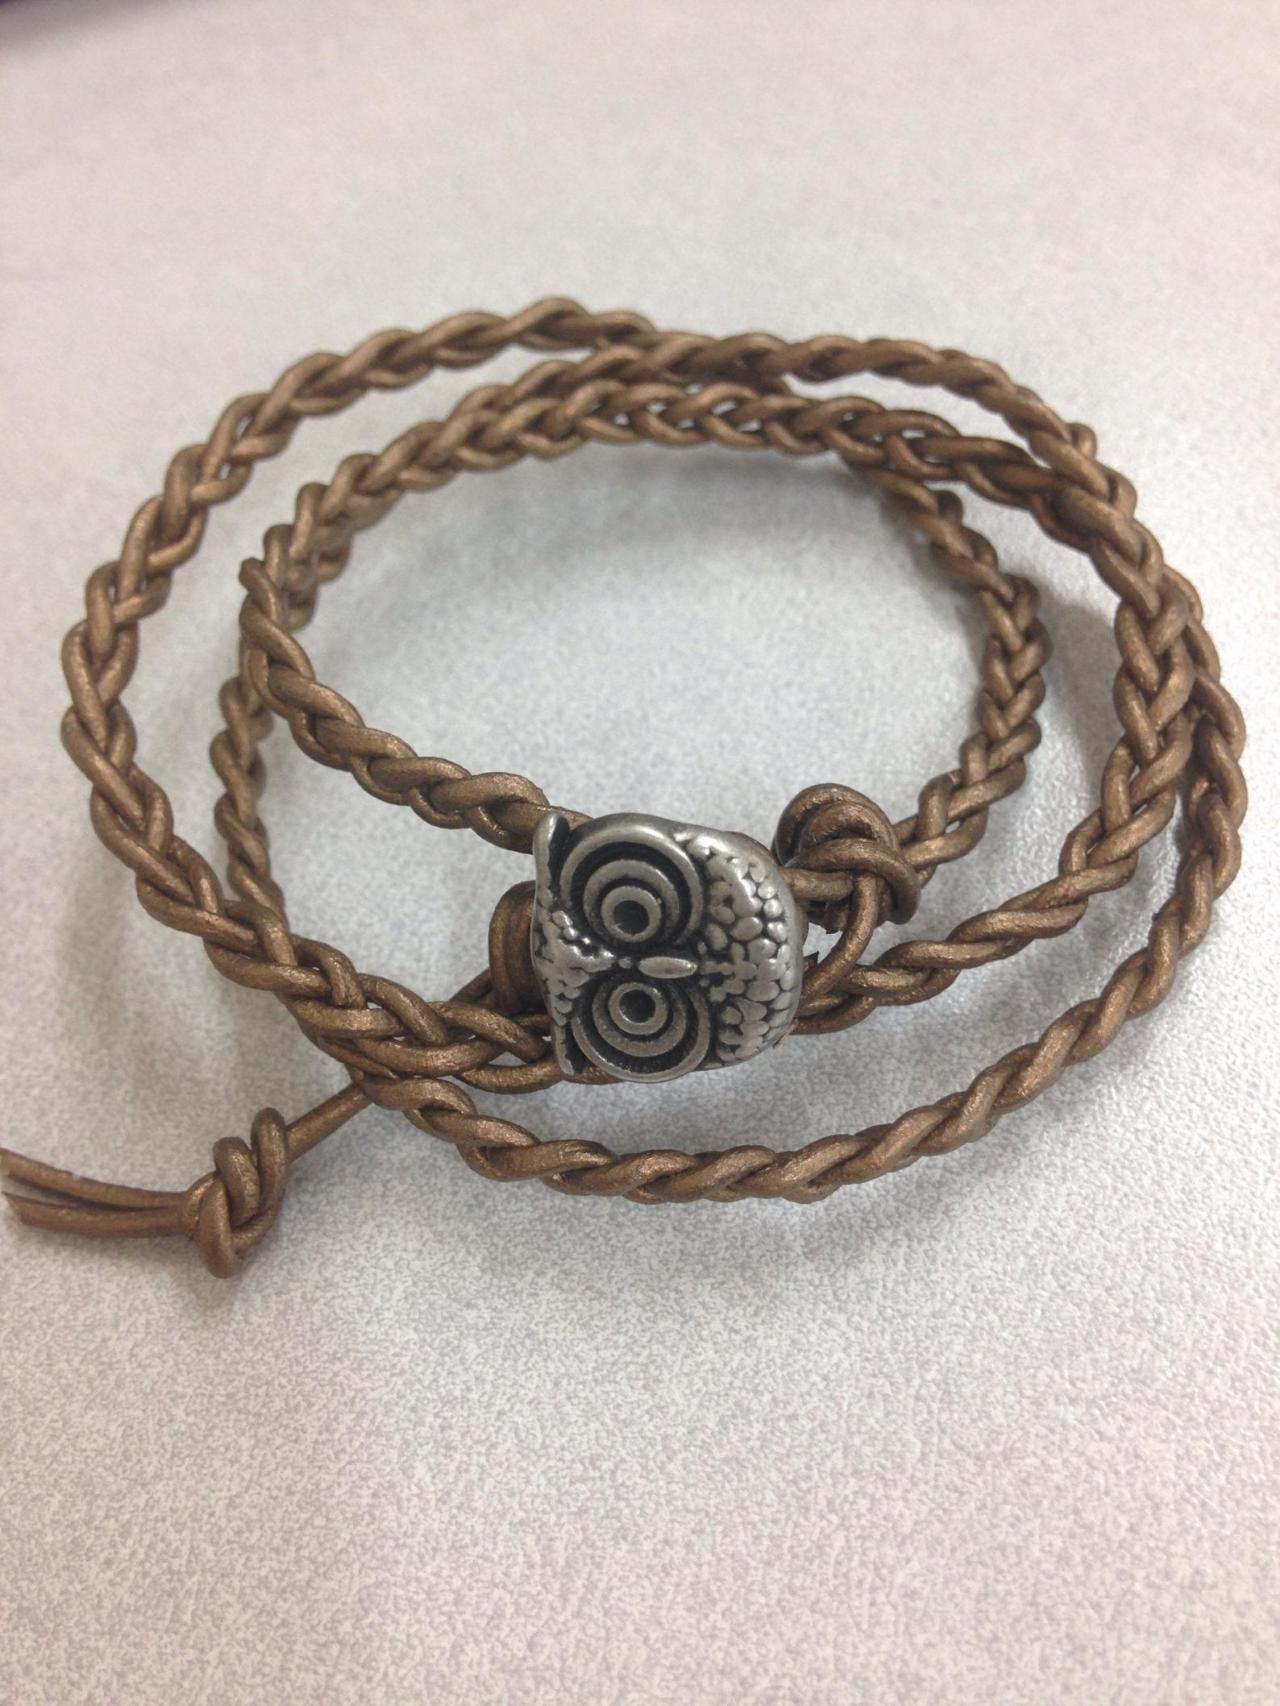 Triple wrap braided leather bracelet